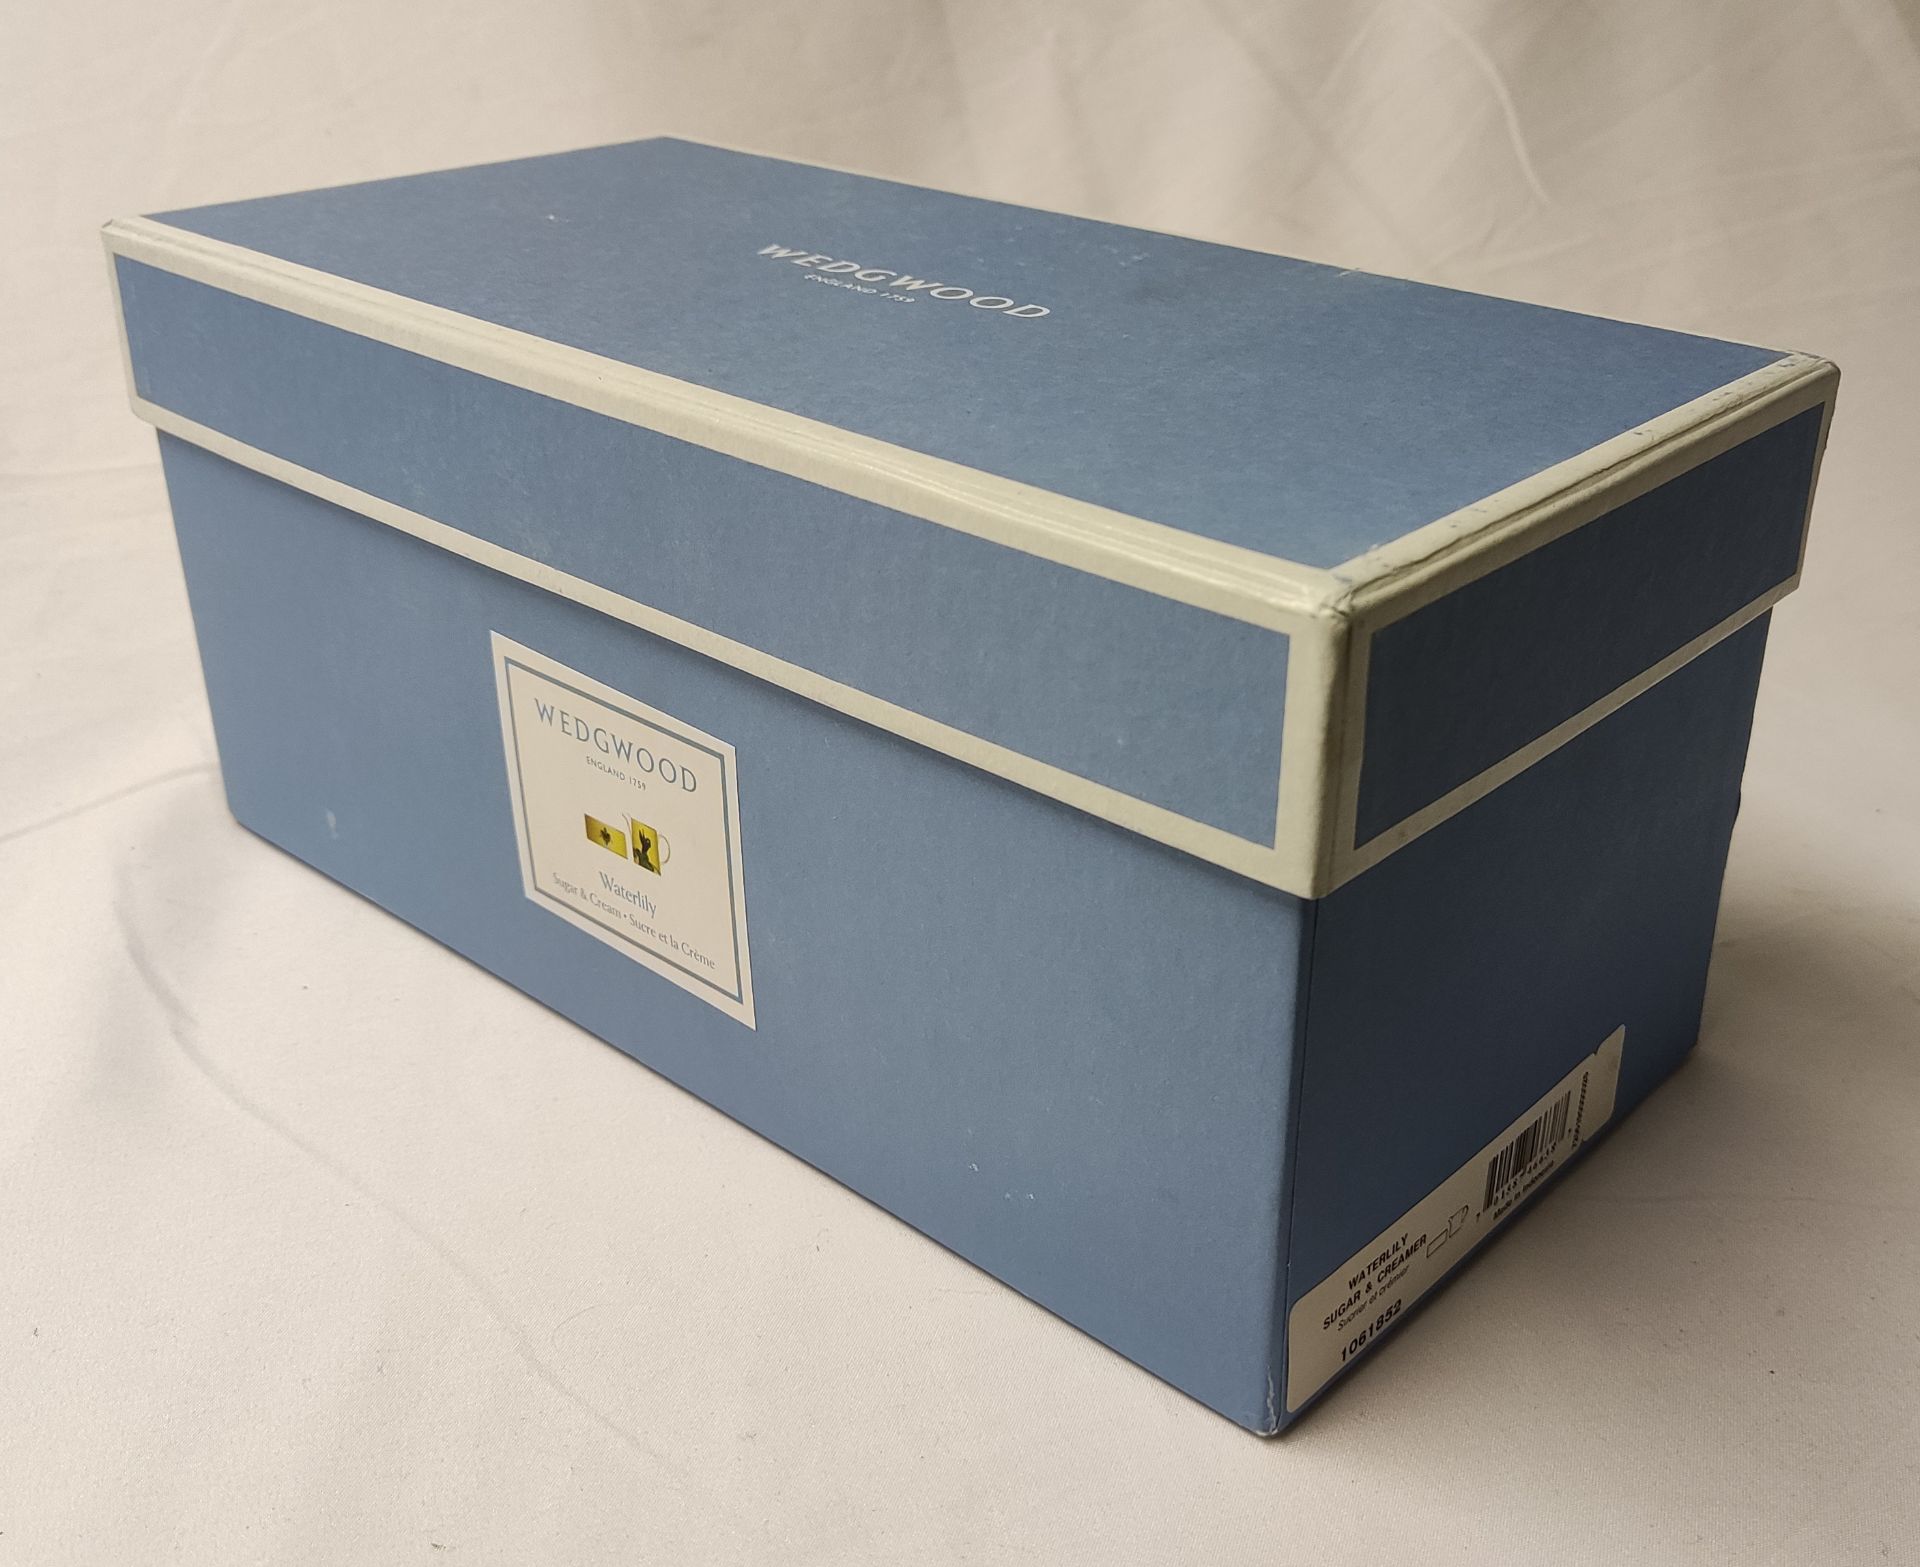 1 x WEDGWOOD Wonderlust Waterlily Fine Bone China Sugar & Creamer Set - New/Boxed - RRP £80 - - Image 8 of 22